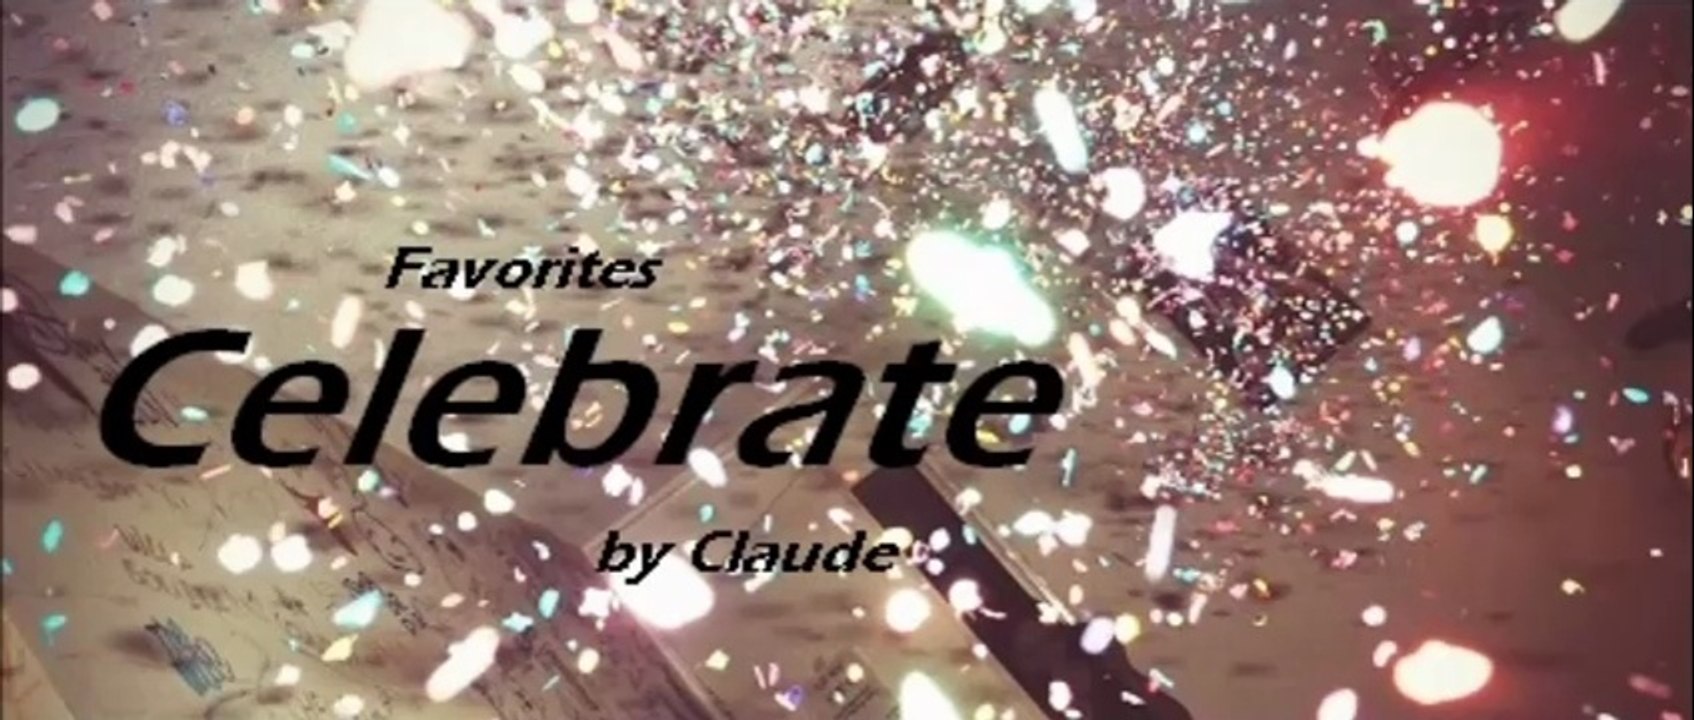 Celebrate by Claude (R&B - Favorites)